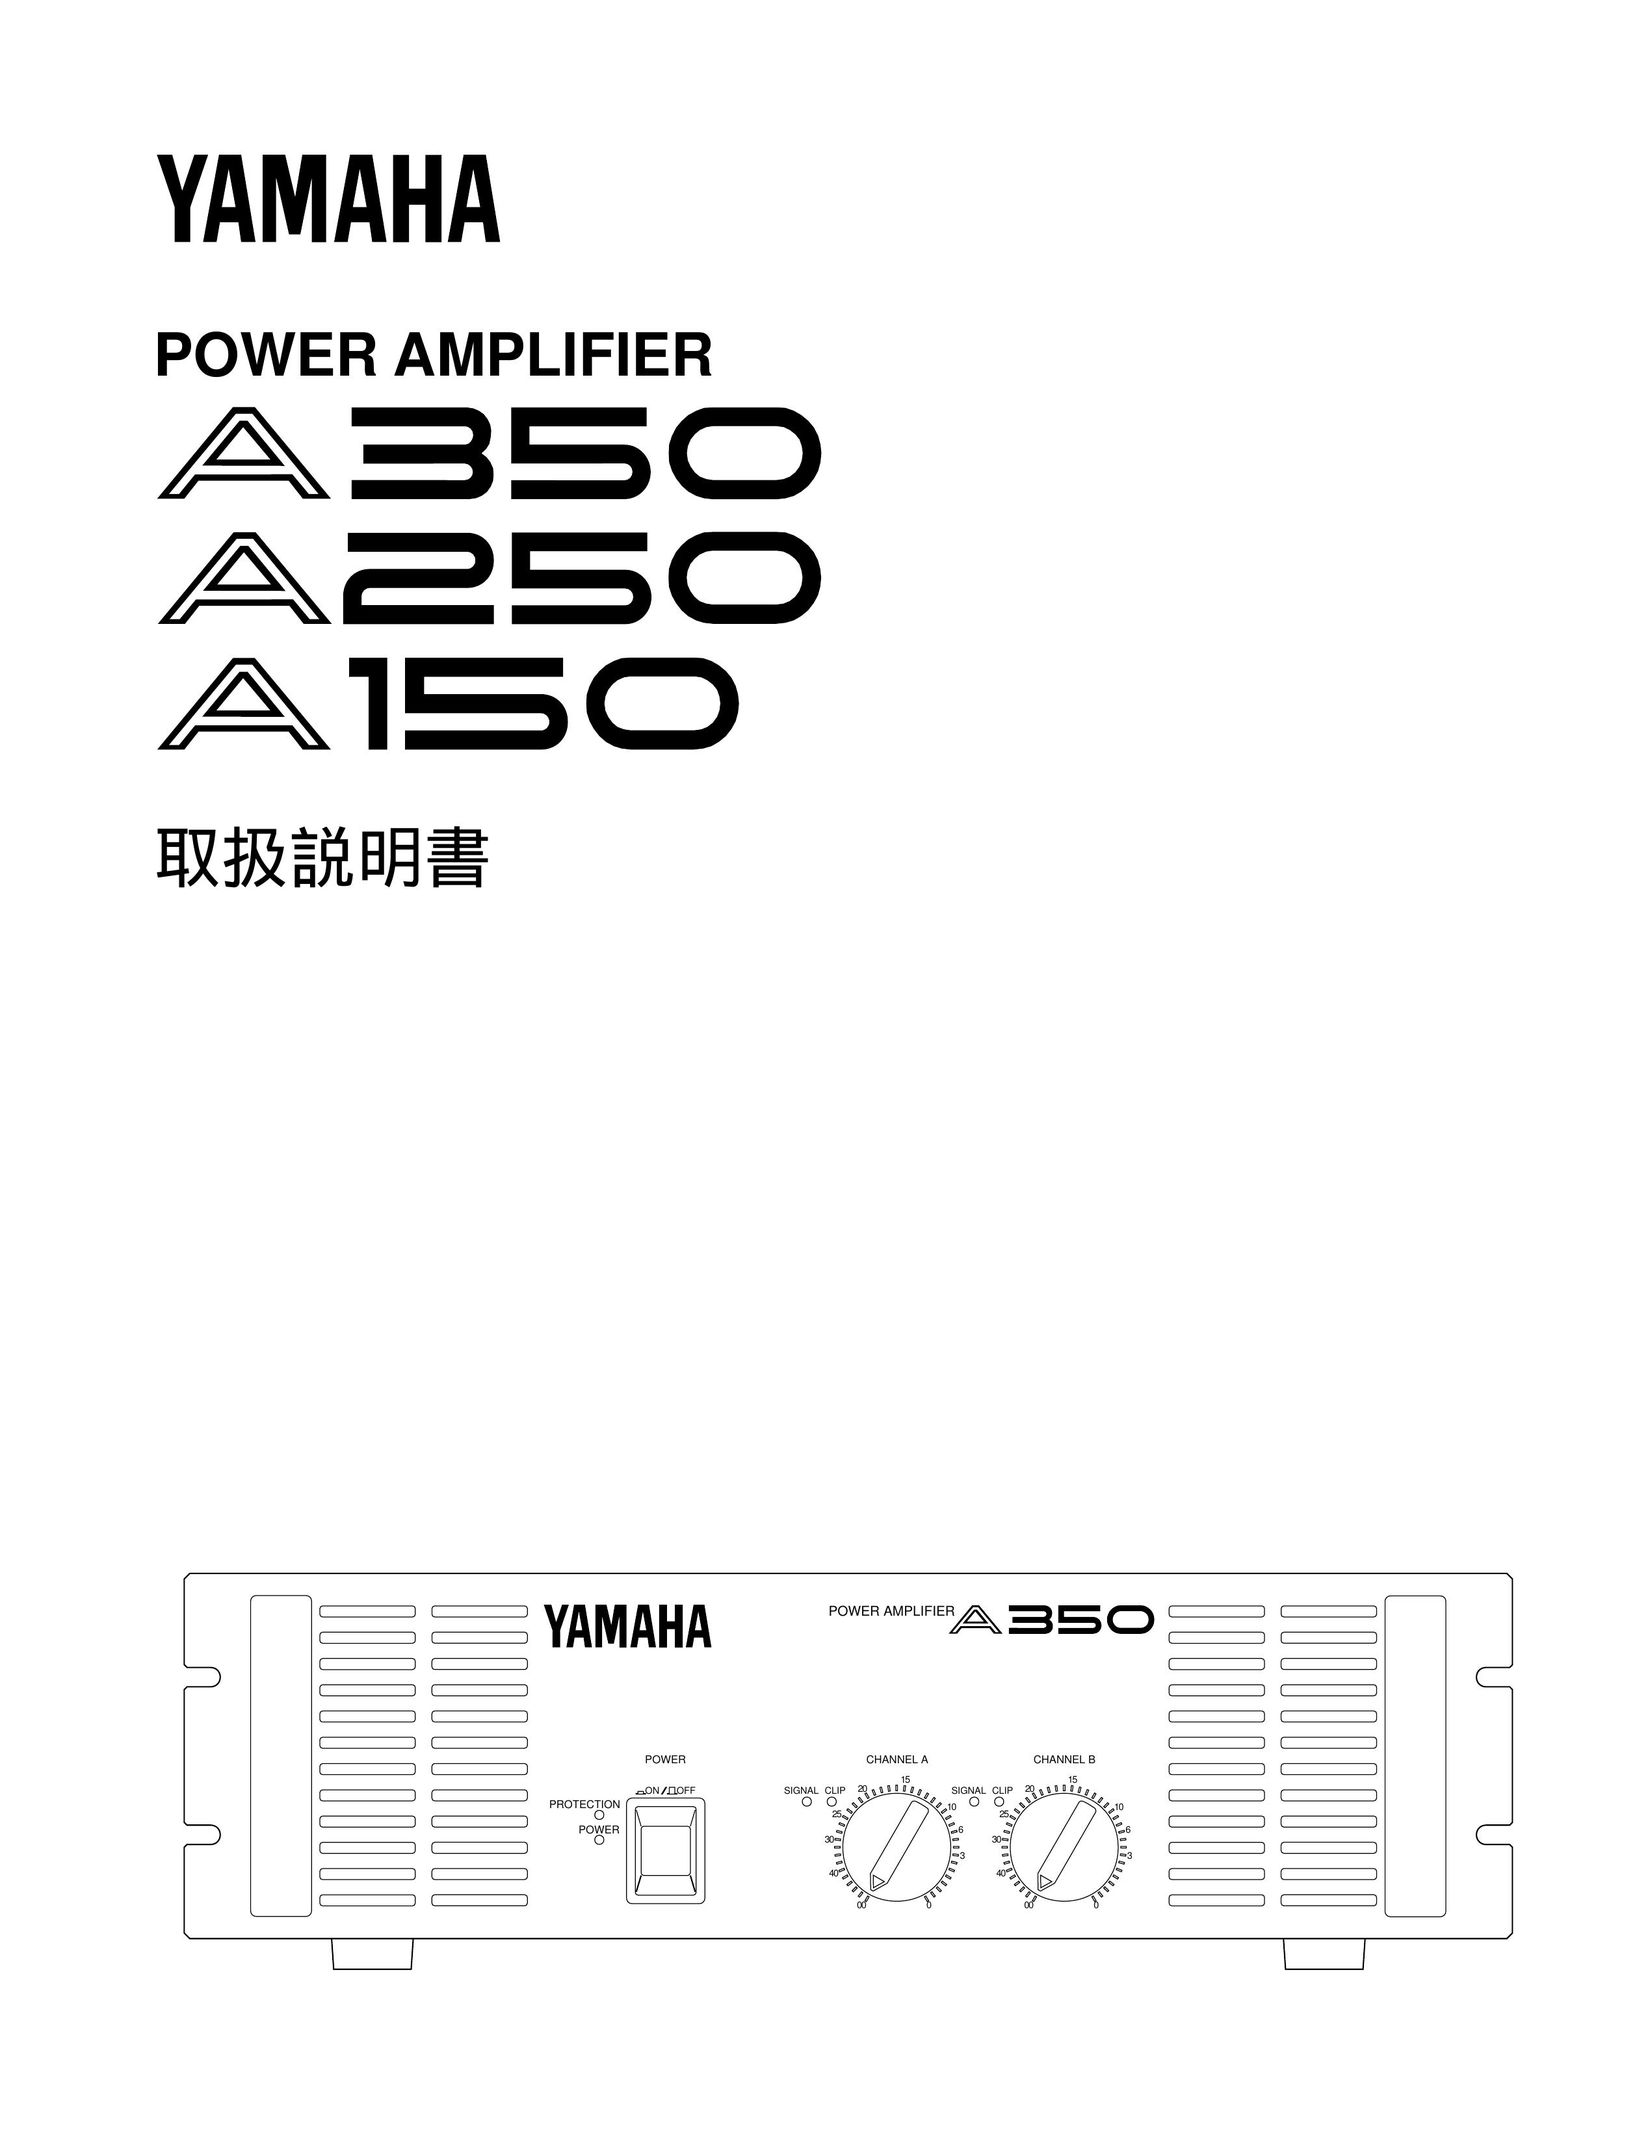 Yamaha A350 Stereo Amplifier User Manual